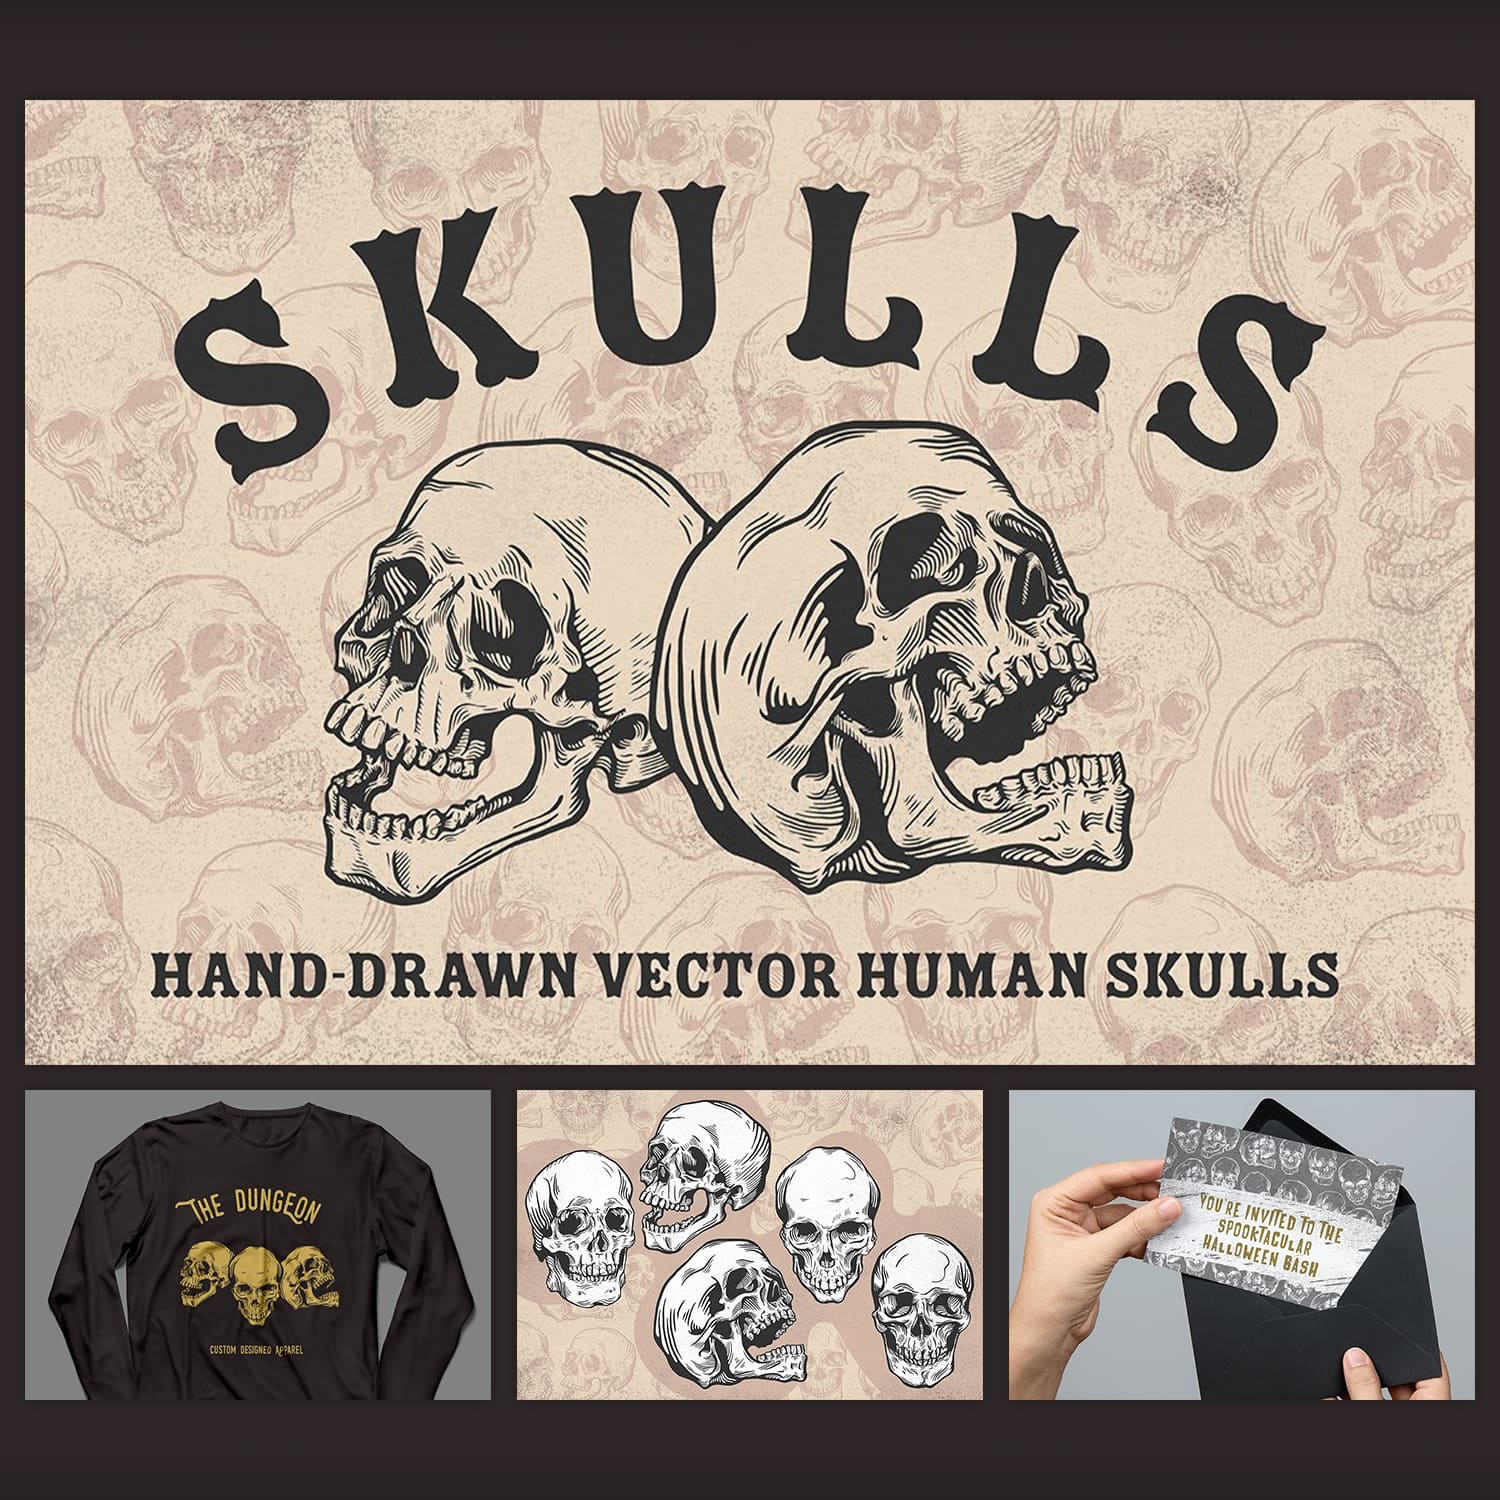 Skulls cover image.